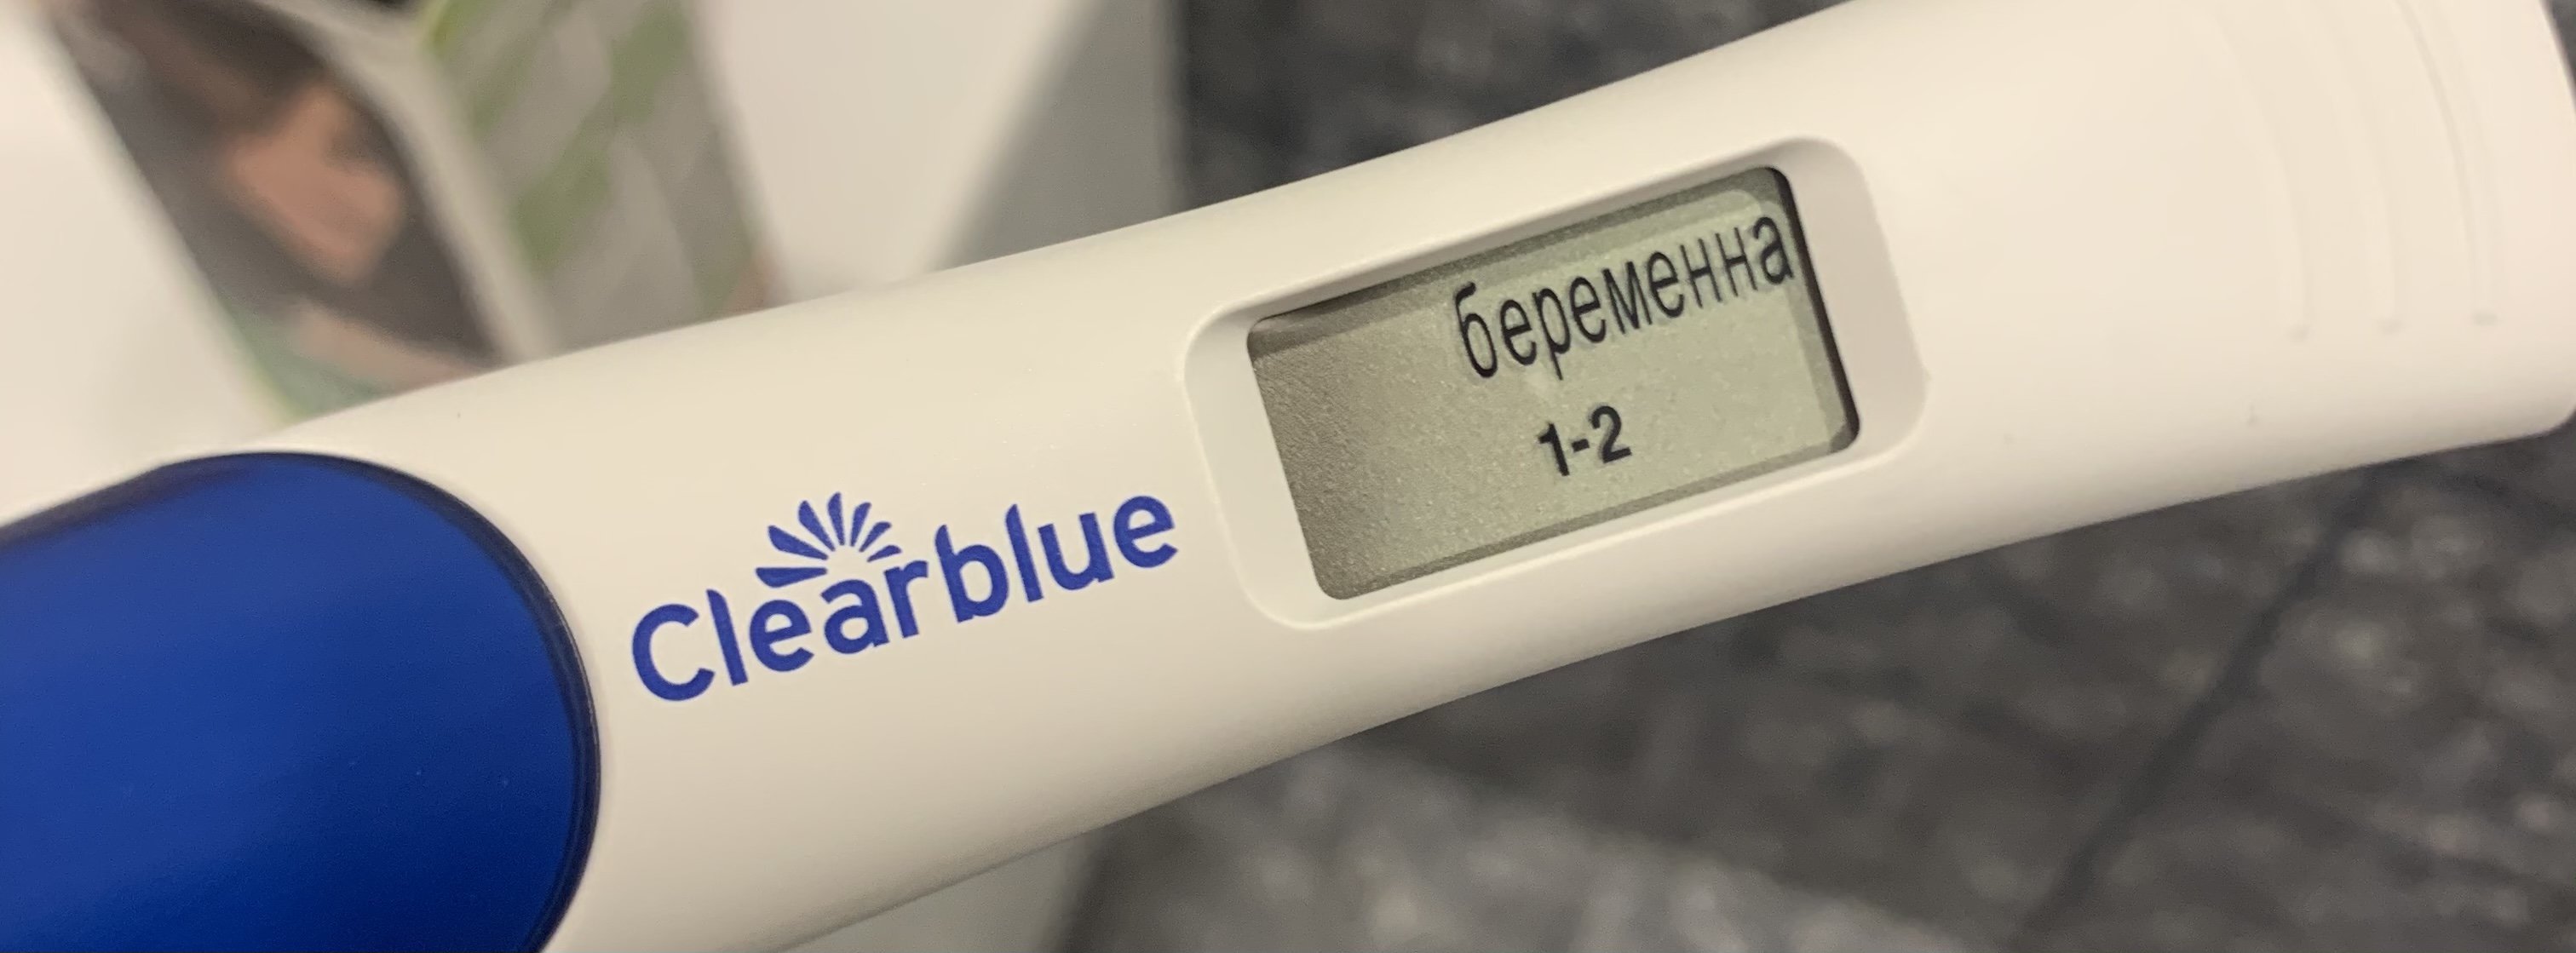 Электронный тест 2 класса. 1-2 Недели электронный тест Clearblue. Электронный тест на беременность Clearblue 1-2 недели беременности. Clearblue 3+. 11 ДПО тест Clearblue электронный.